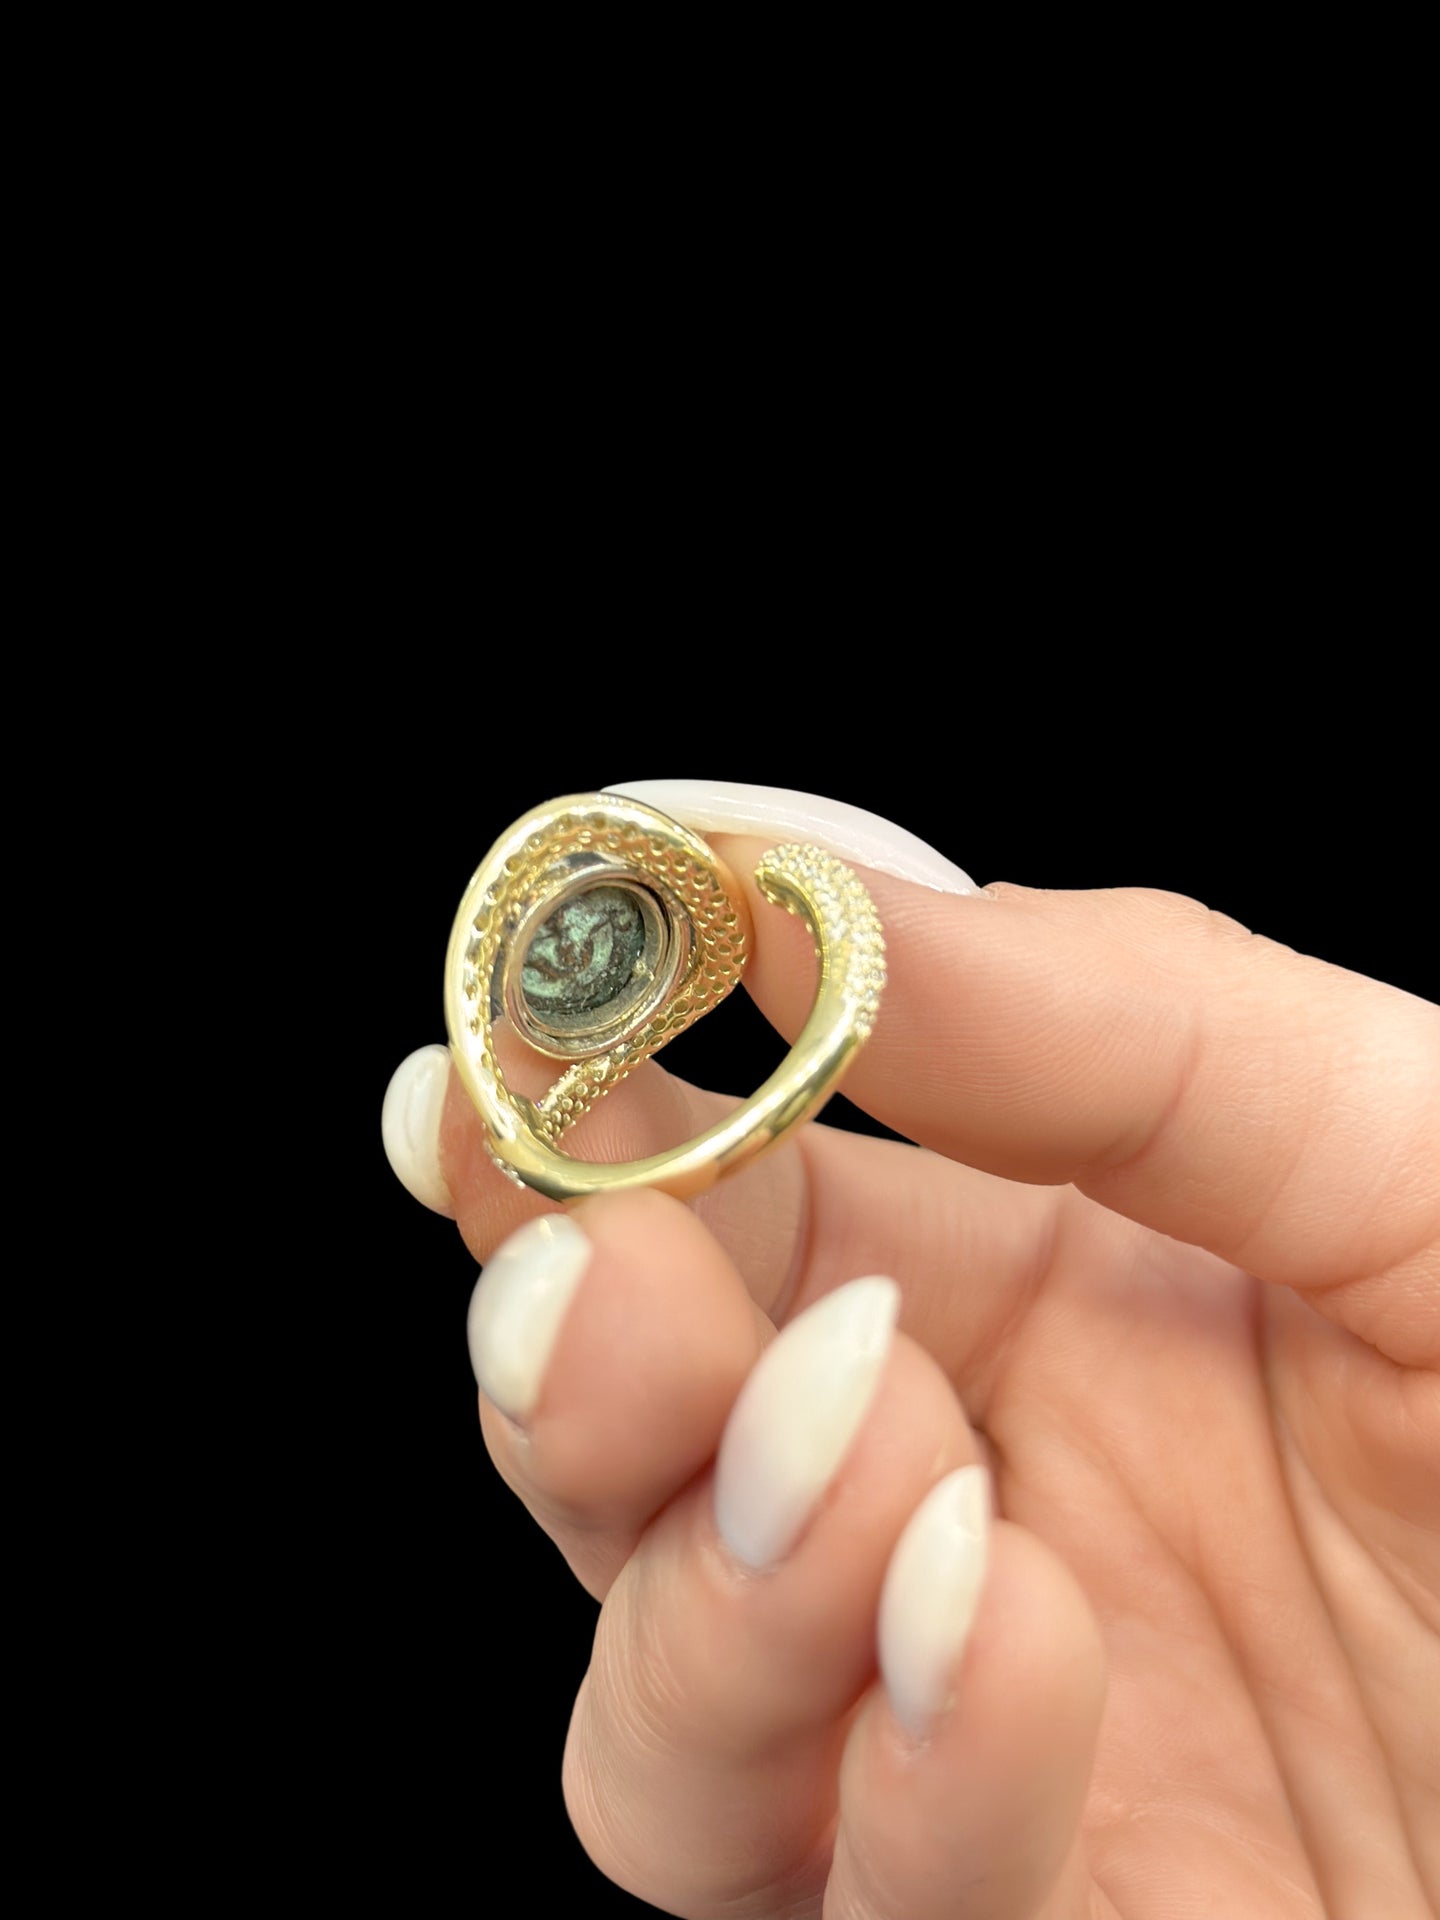 Ancient Widow’s Mite Jewish Maccabean Coin Set in 14k Gold Ring